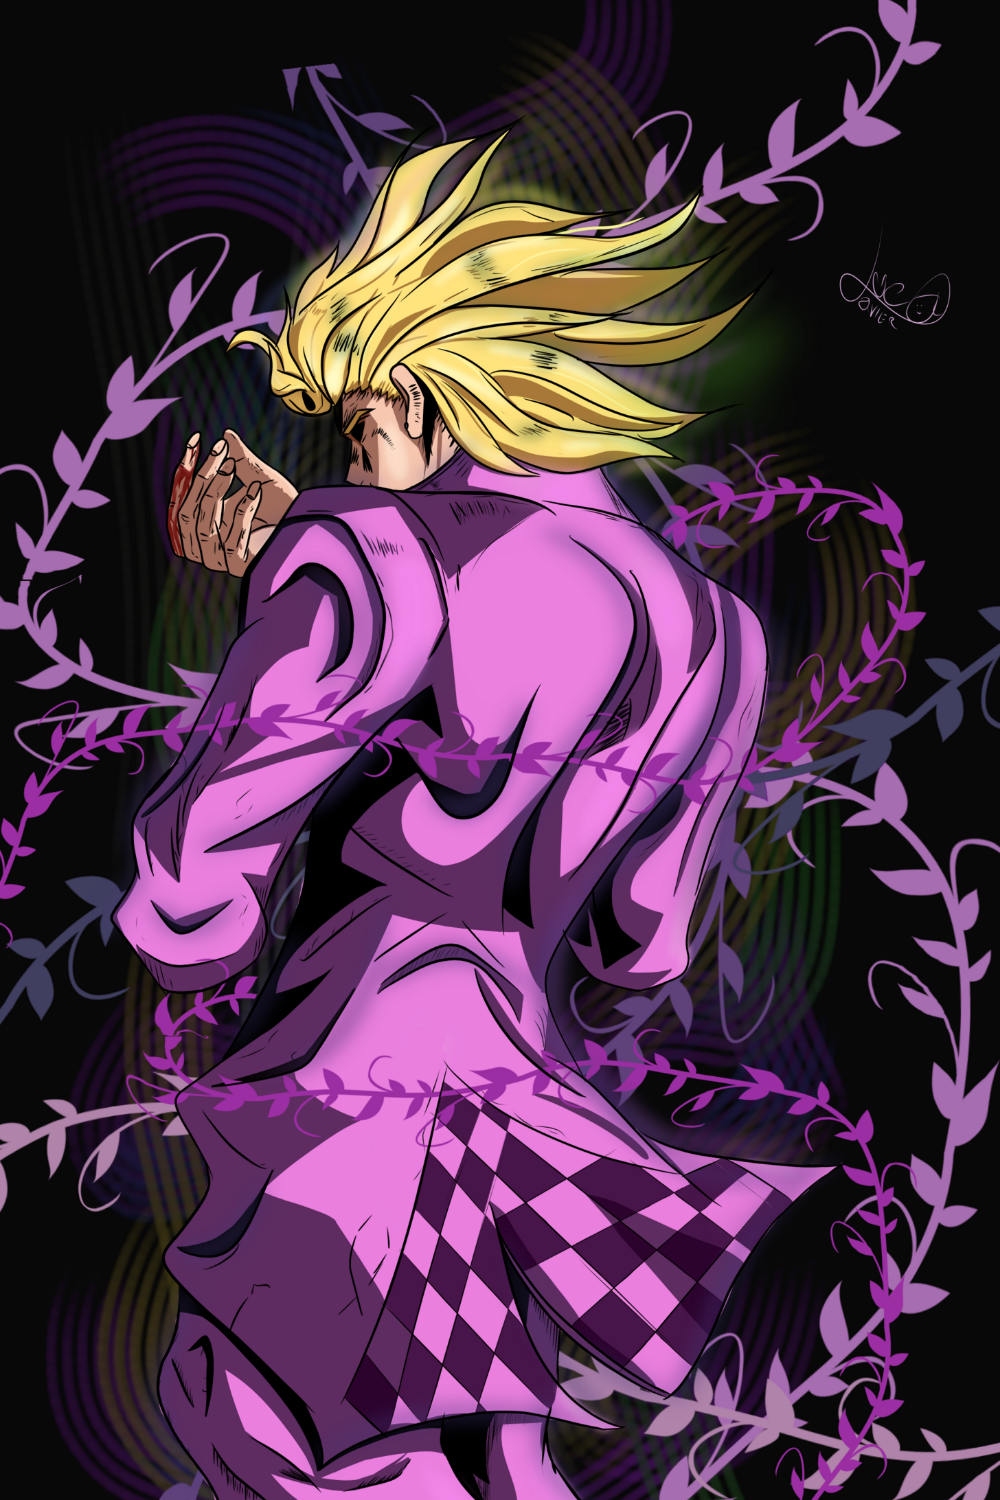 Download Stylish Jojo Pose in Vibrant Anime Artwork Wallpaper